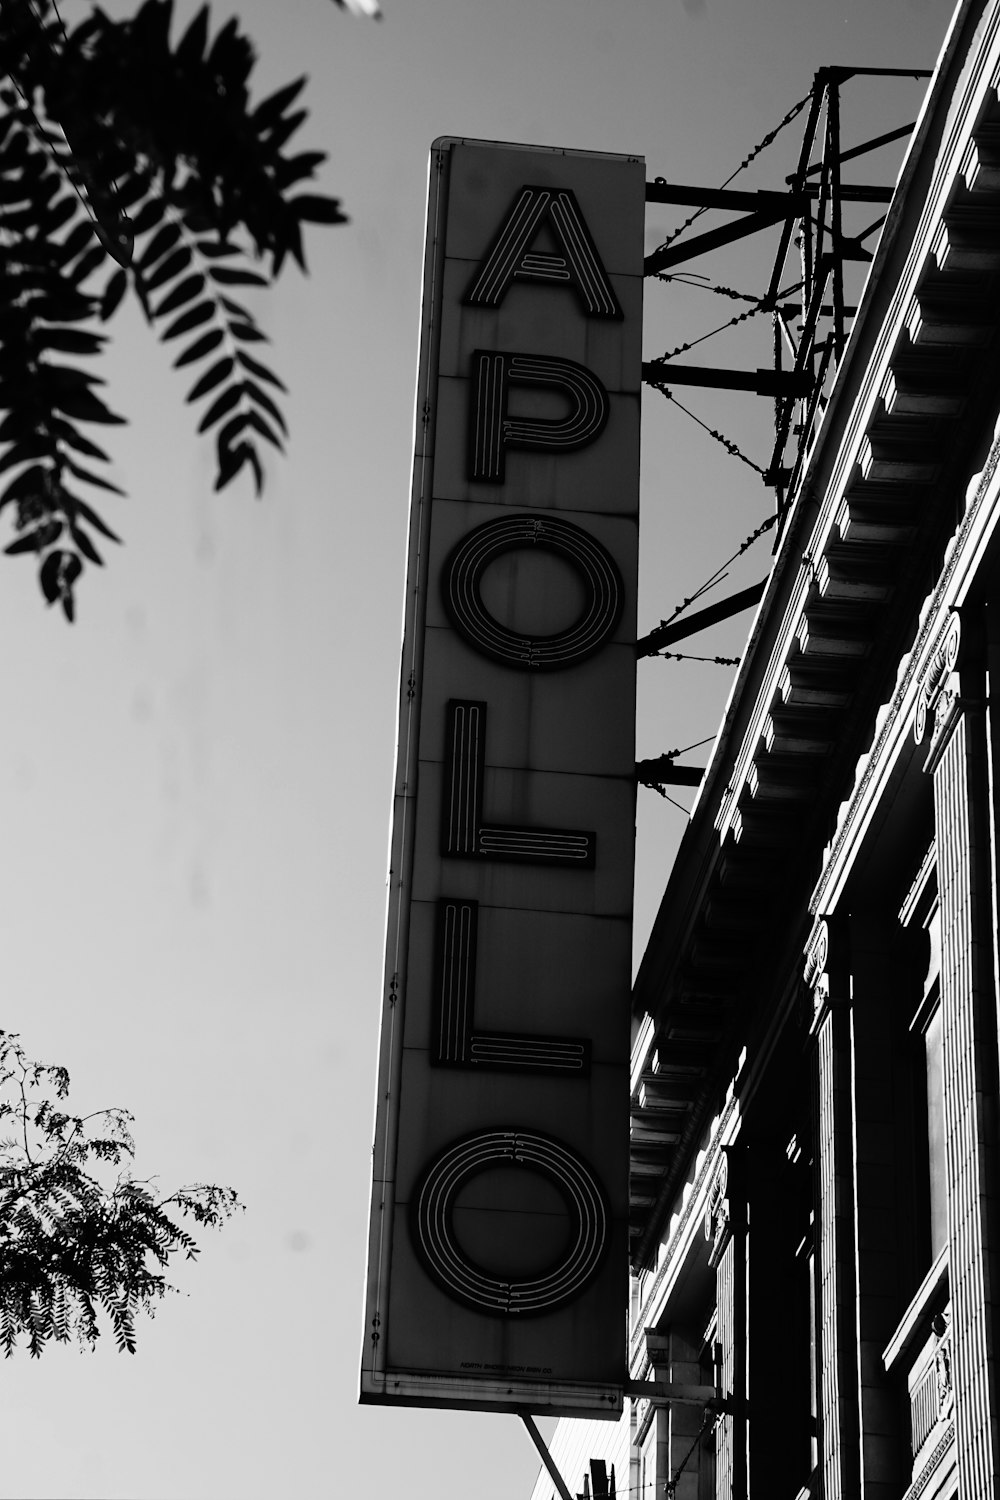 Apollo neon signage on wall